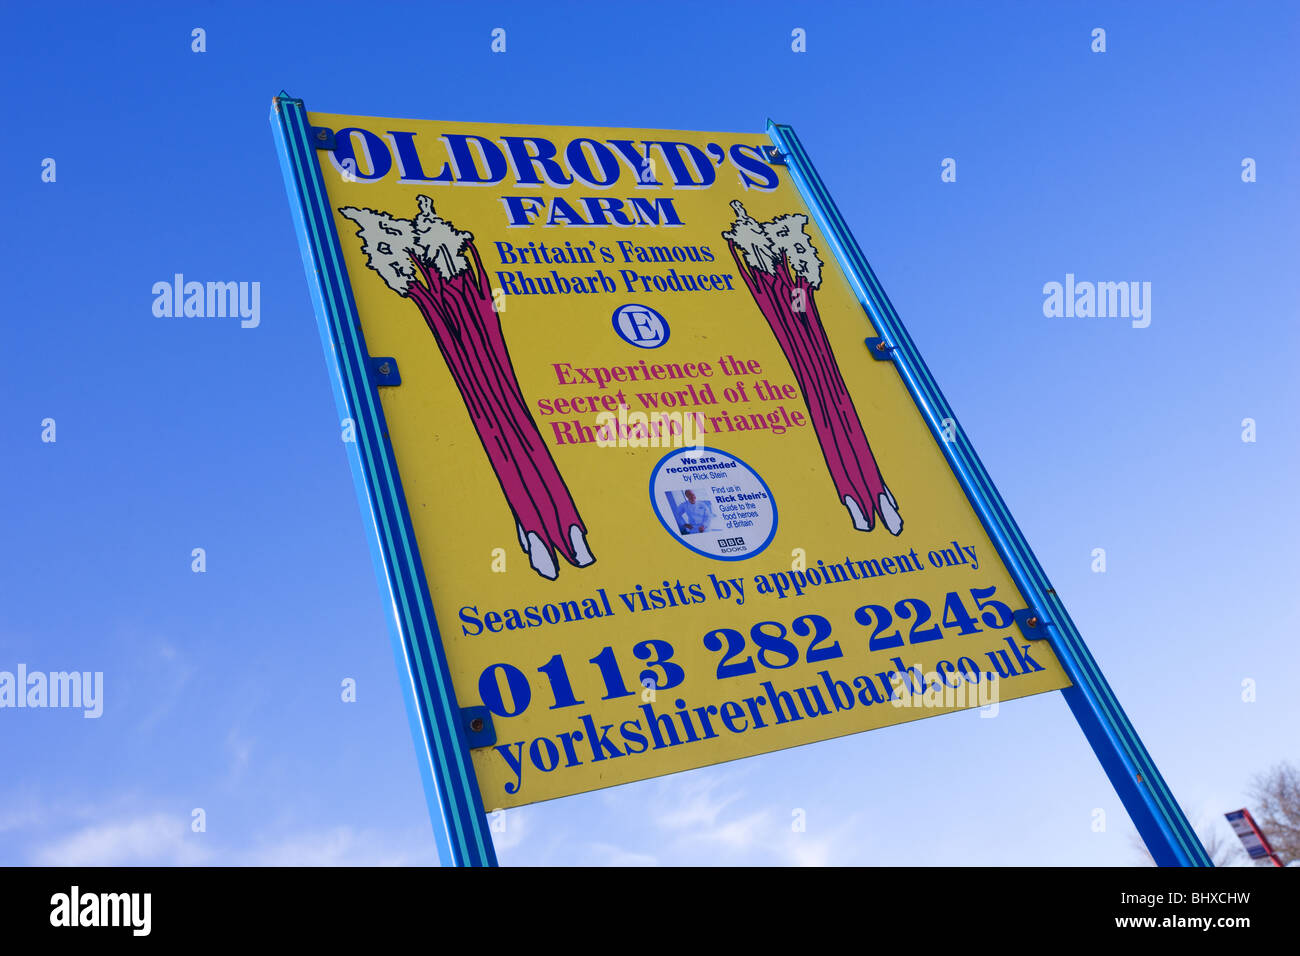 Oldroyd die Rhabarber-Farm in Yorkshire Stockfoto